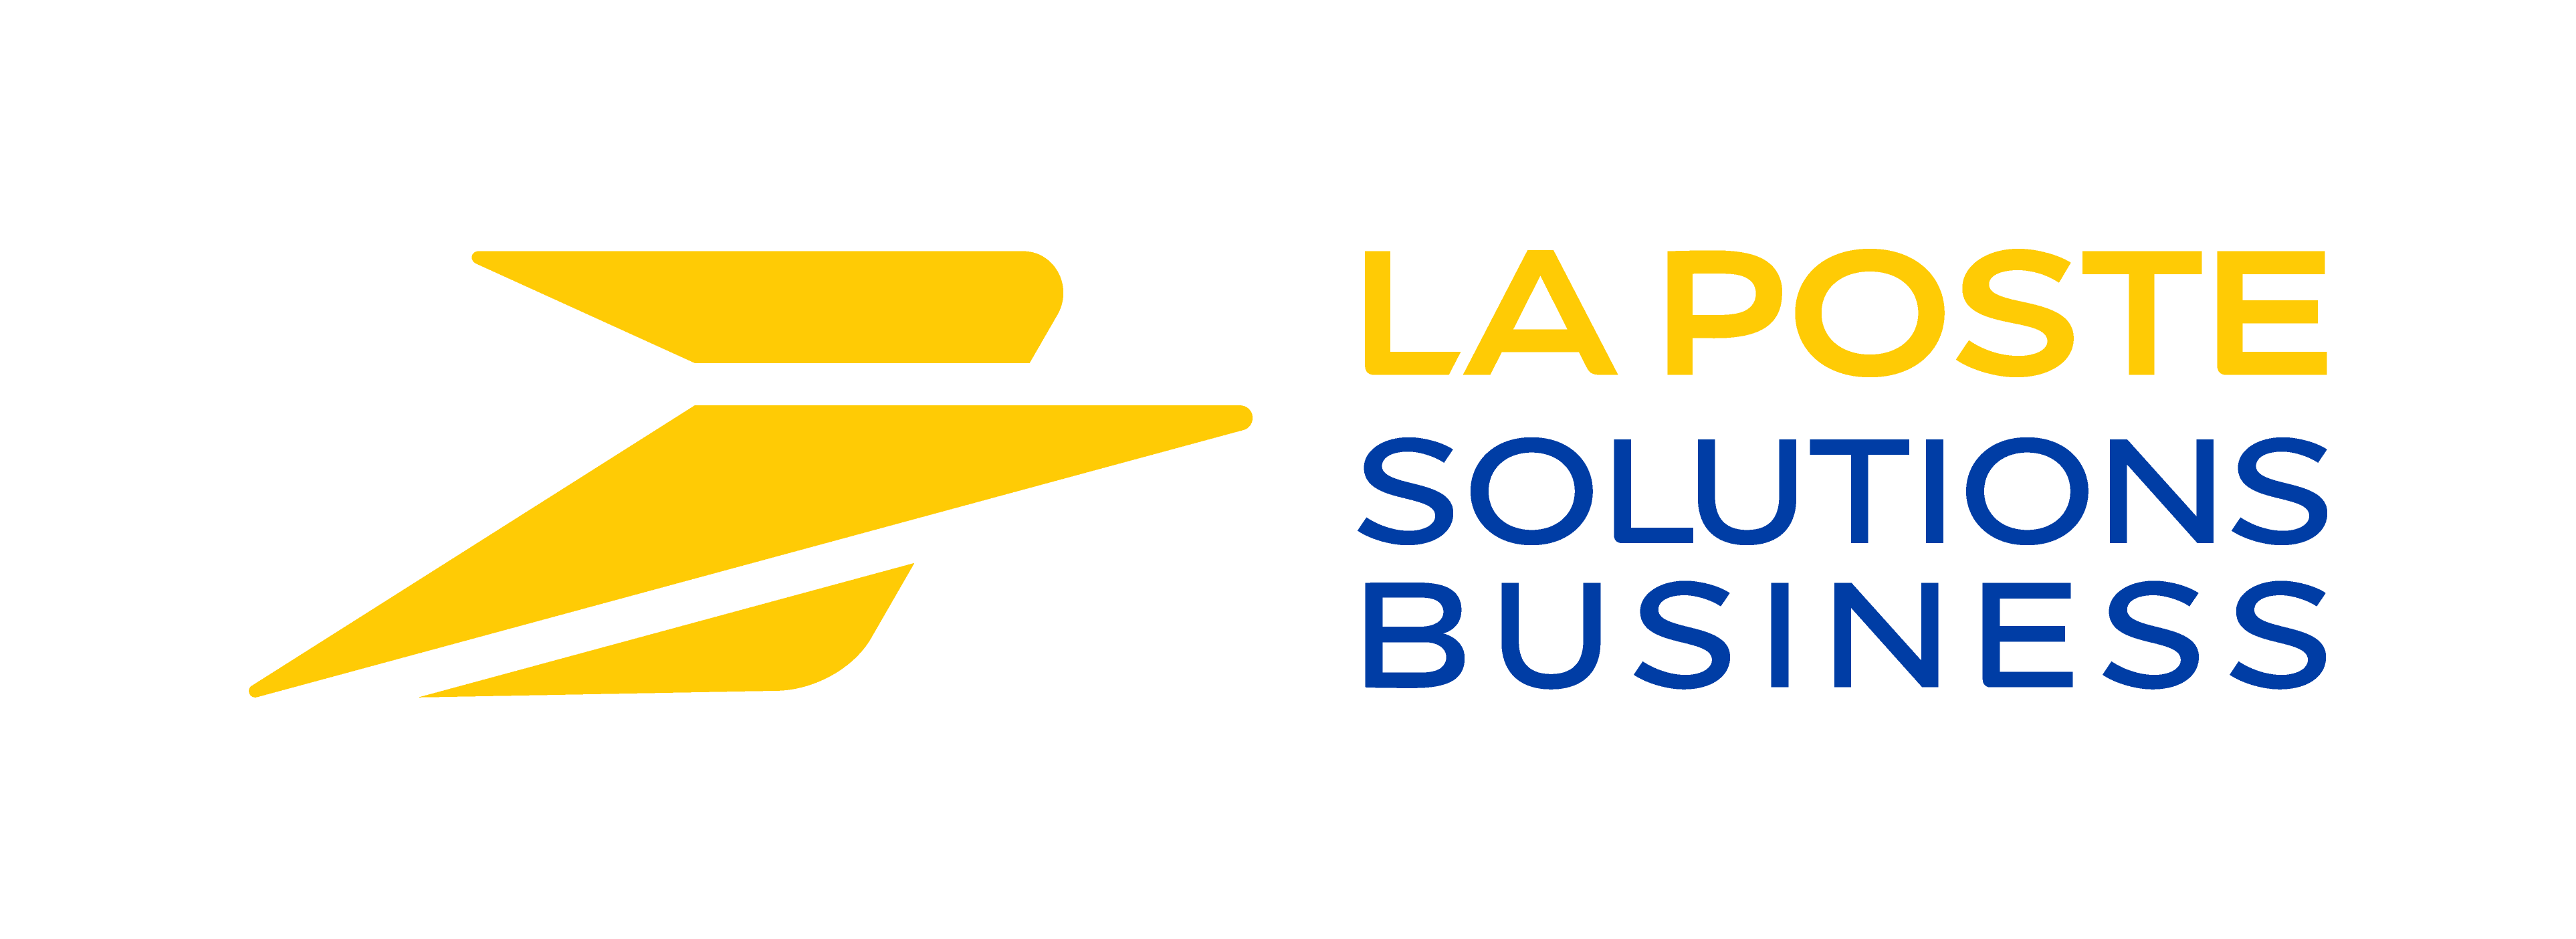 logo-laposte-solutions-business